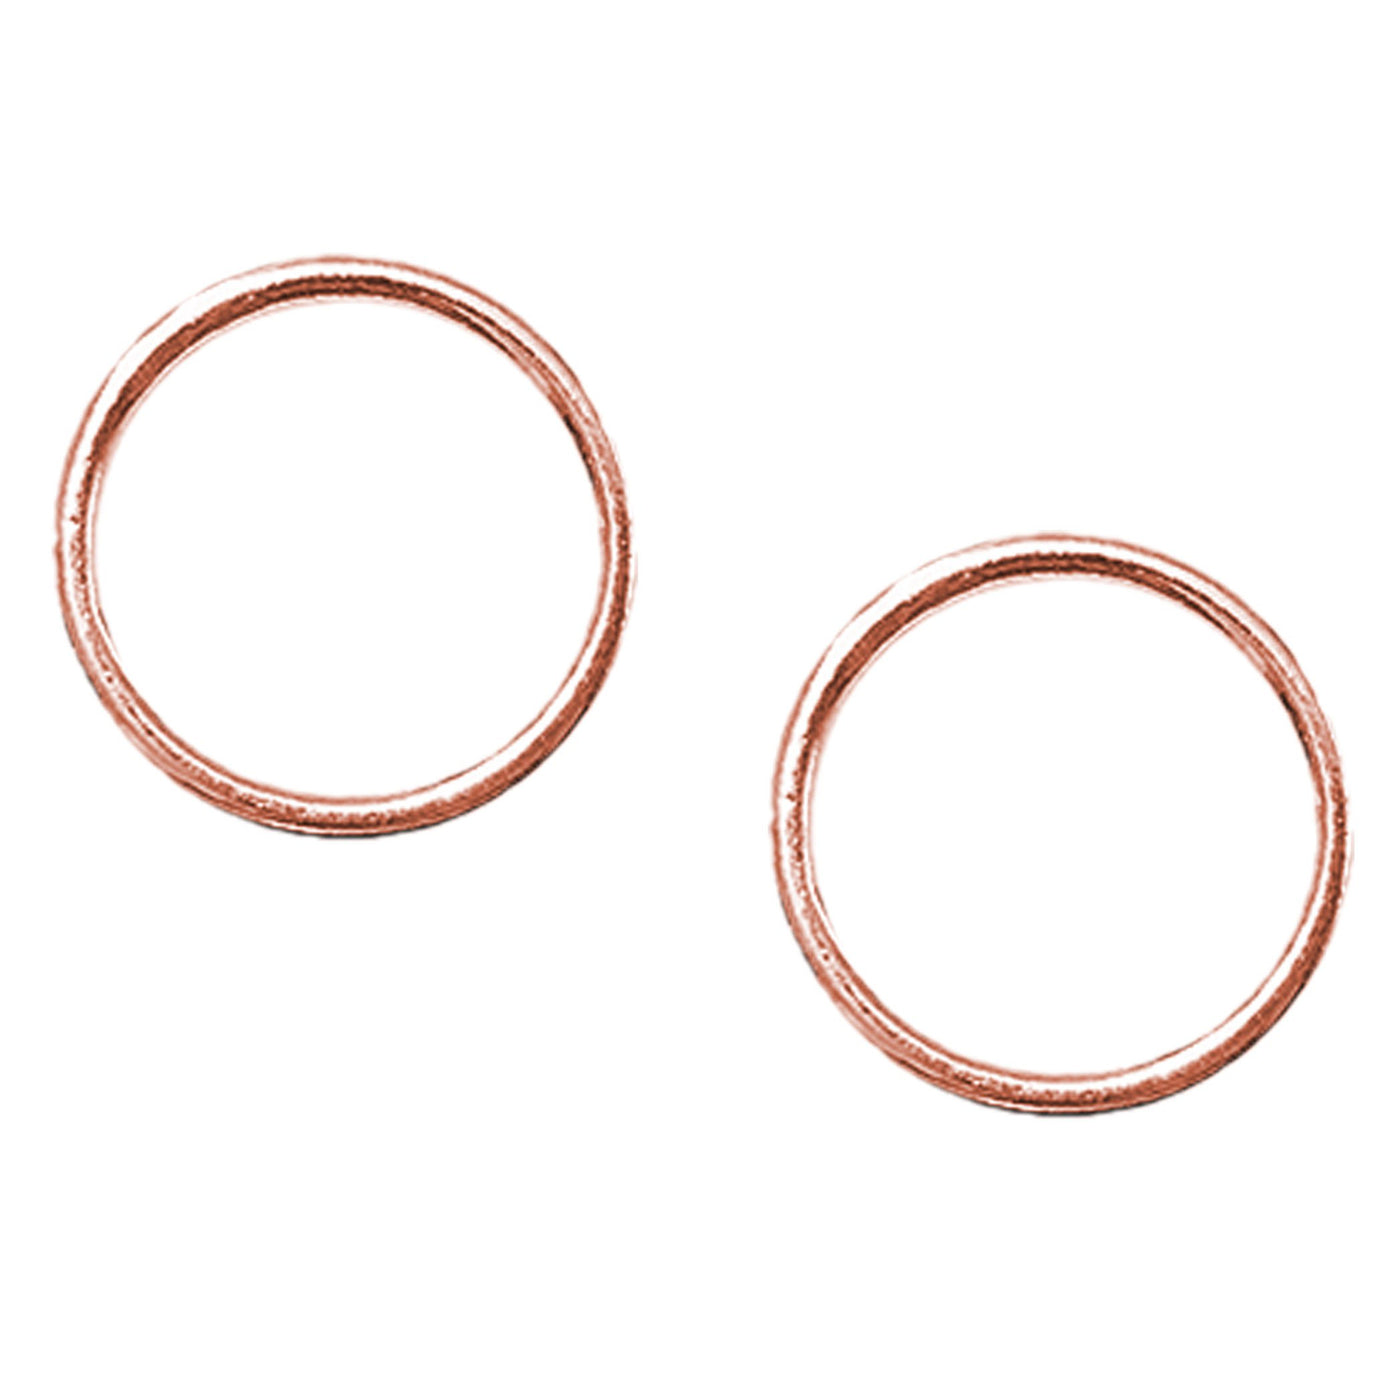 Set of 2 Rings OR 2 Sliders in Rose Gold– 1/4